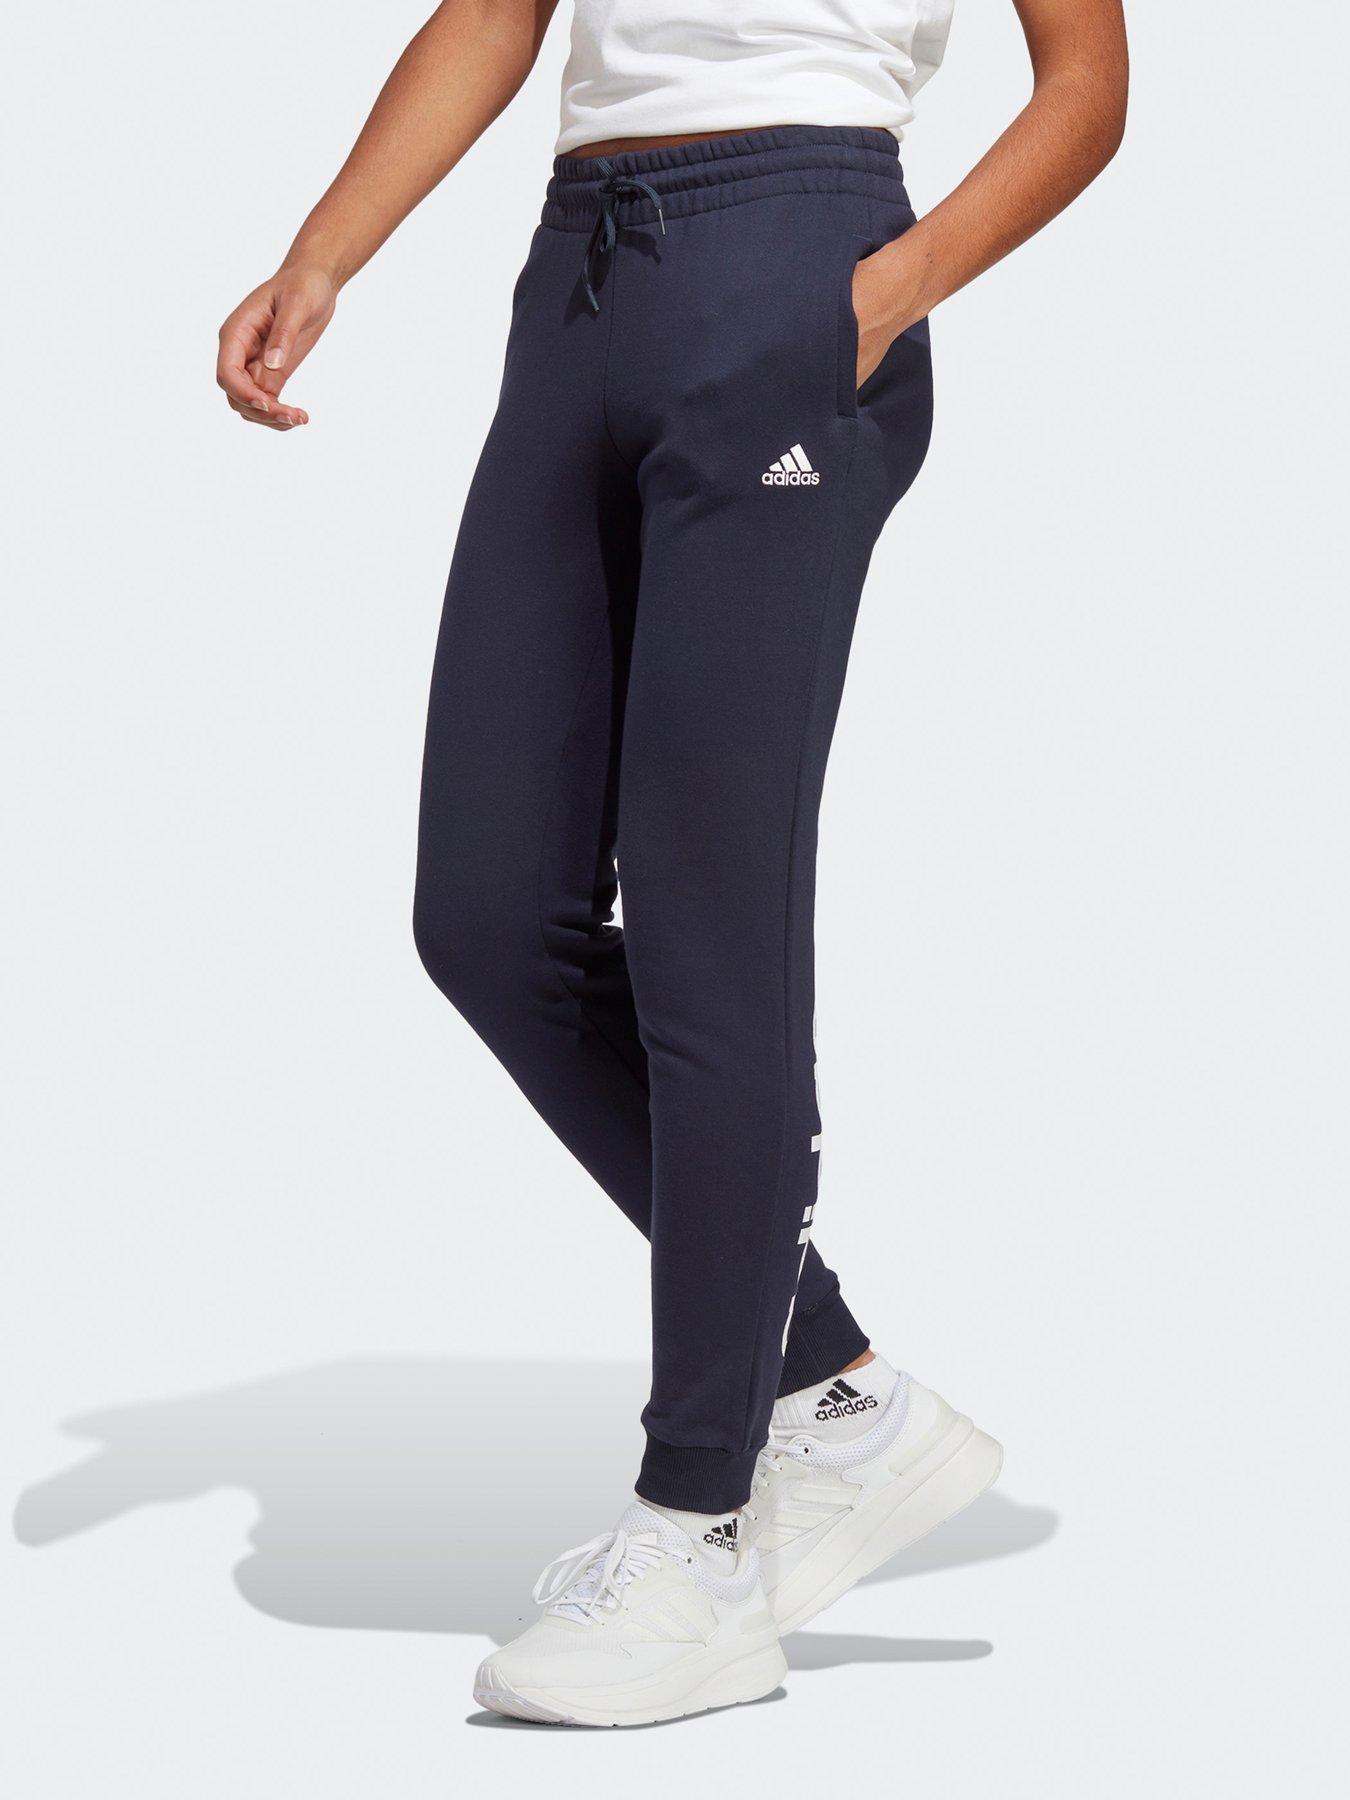 XL, Adidas, Jogging bottoms, Sportswear, Women